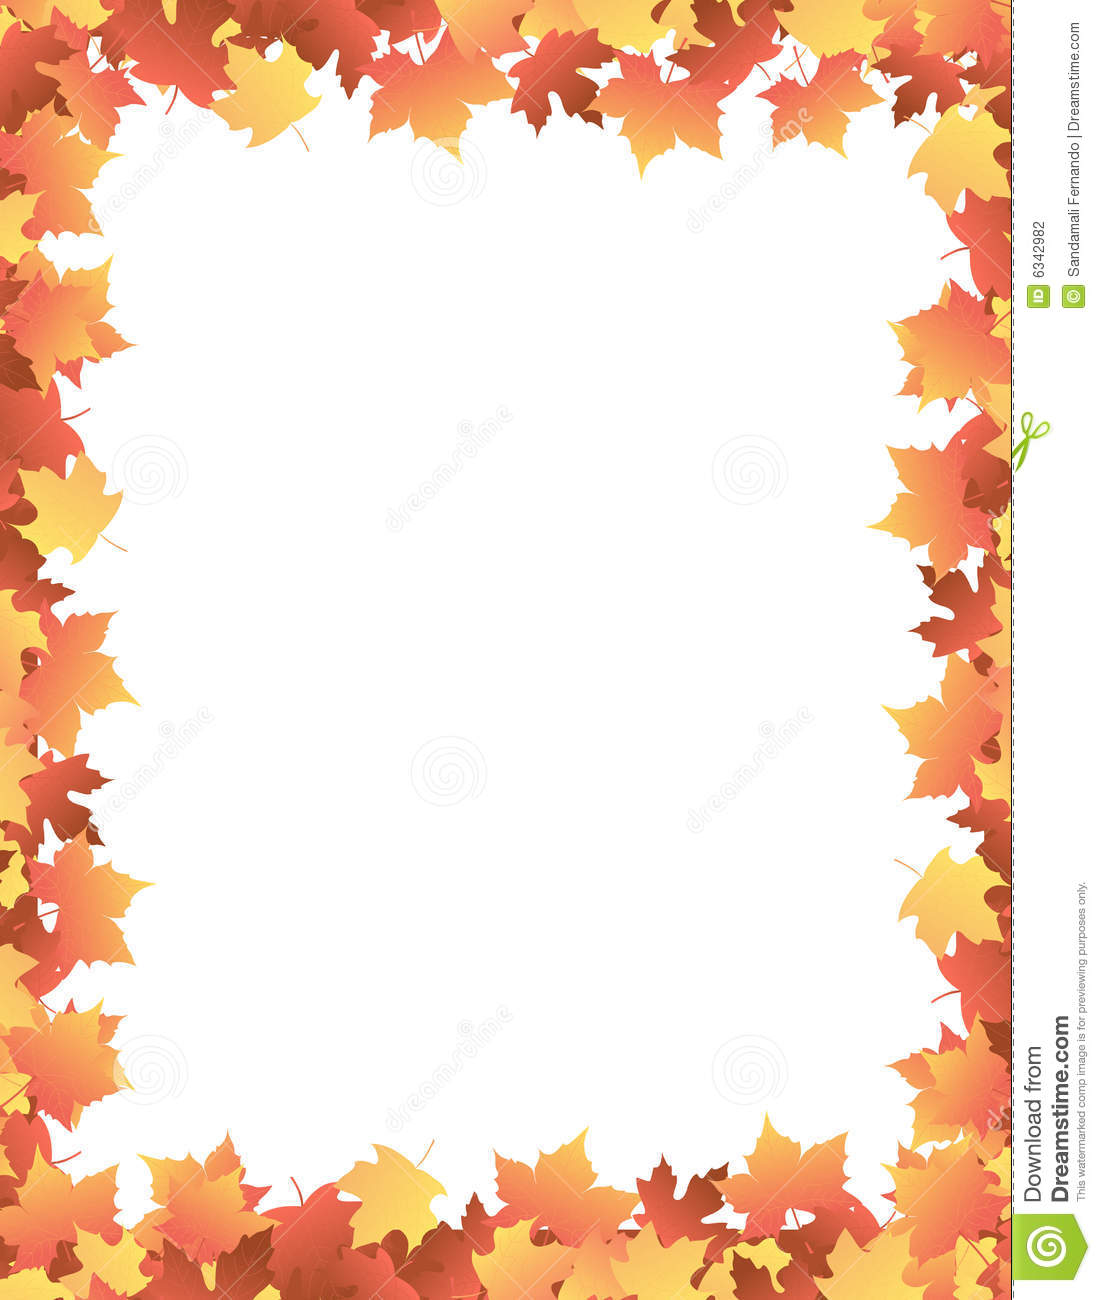 Autumn leaves clip art border